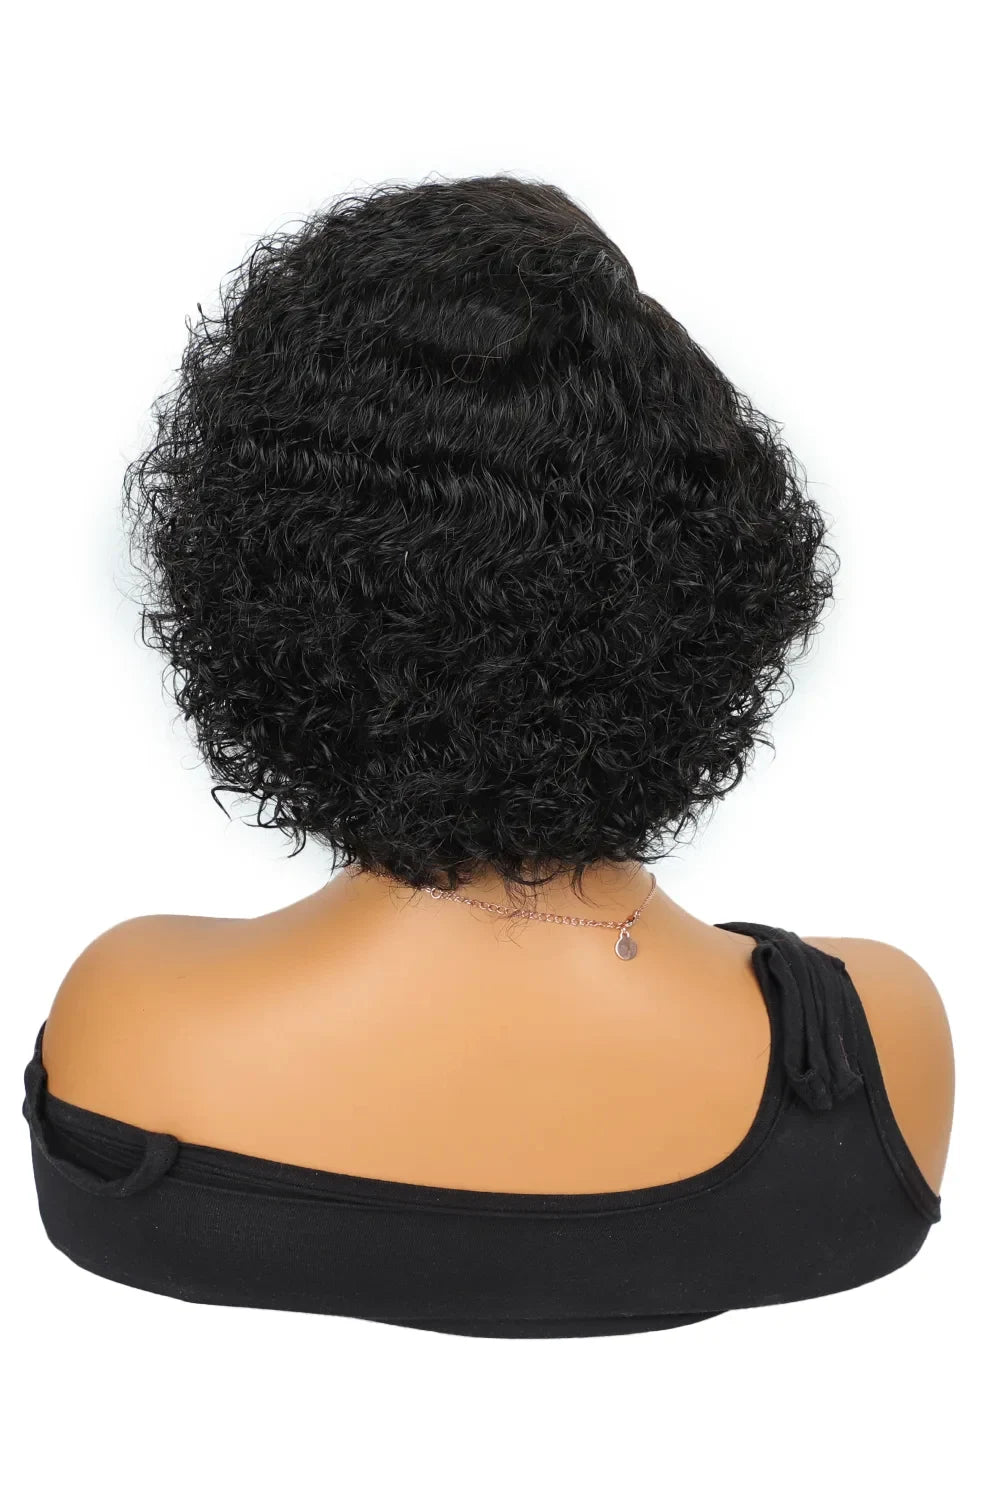 Designer Wigs-Trendy Short Cut Curly Minimalist Full Lace Front Wigs